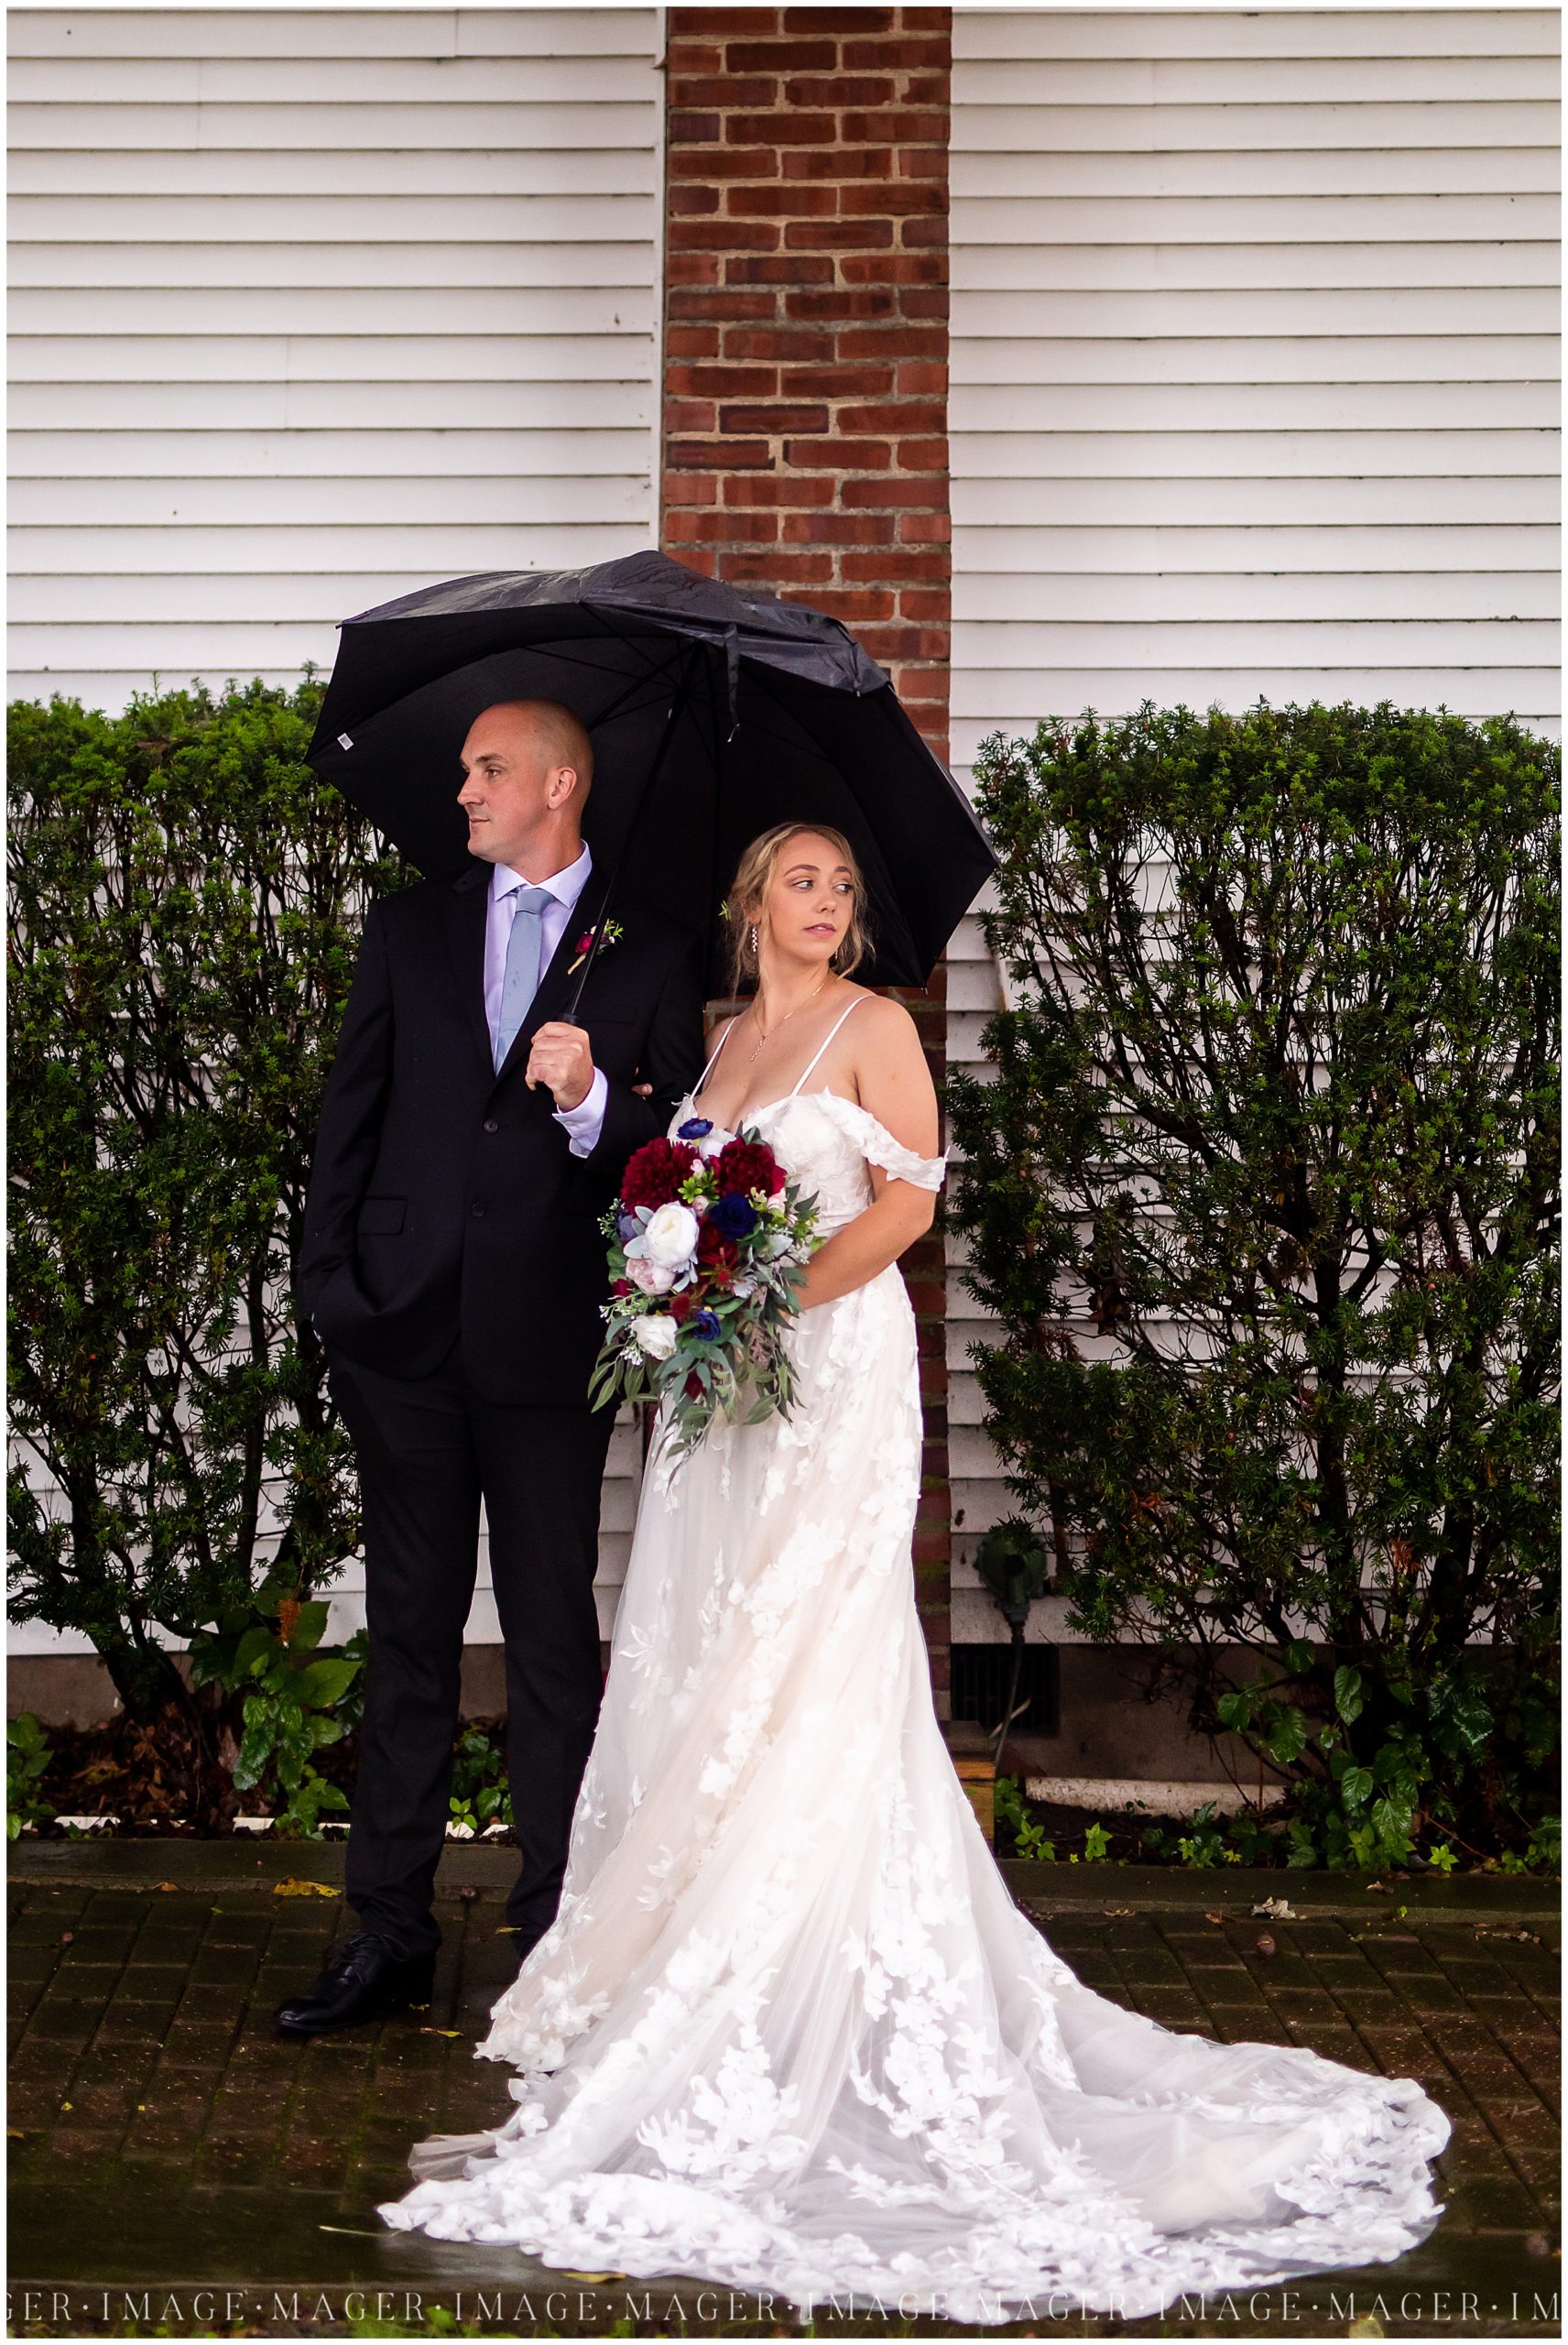 memorial-day-wedding-barn-dress-bride-rainy-day-umbrella